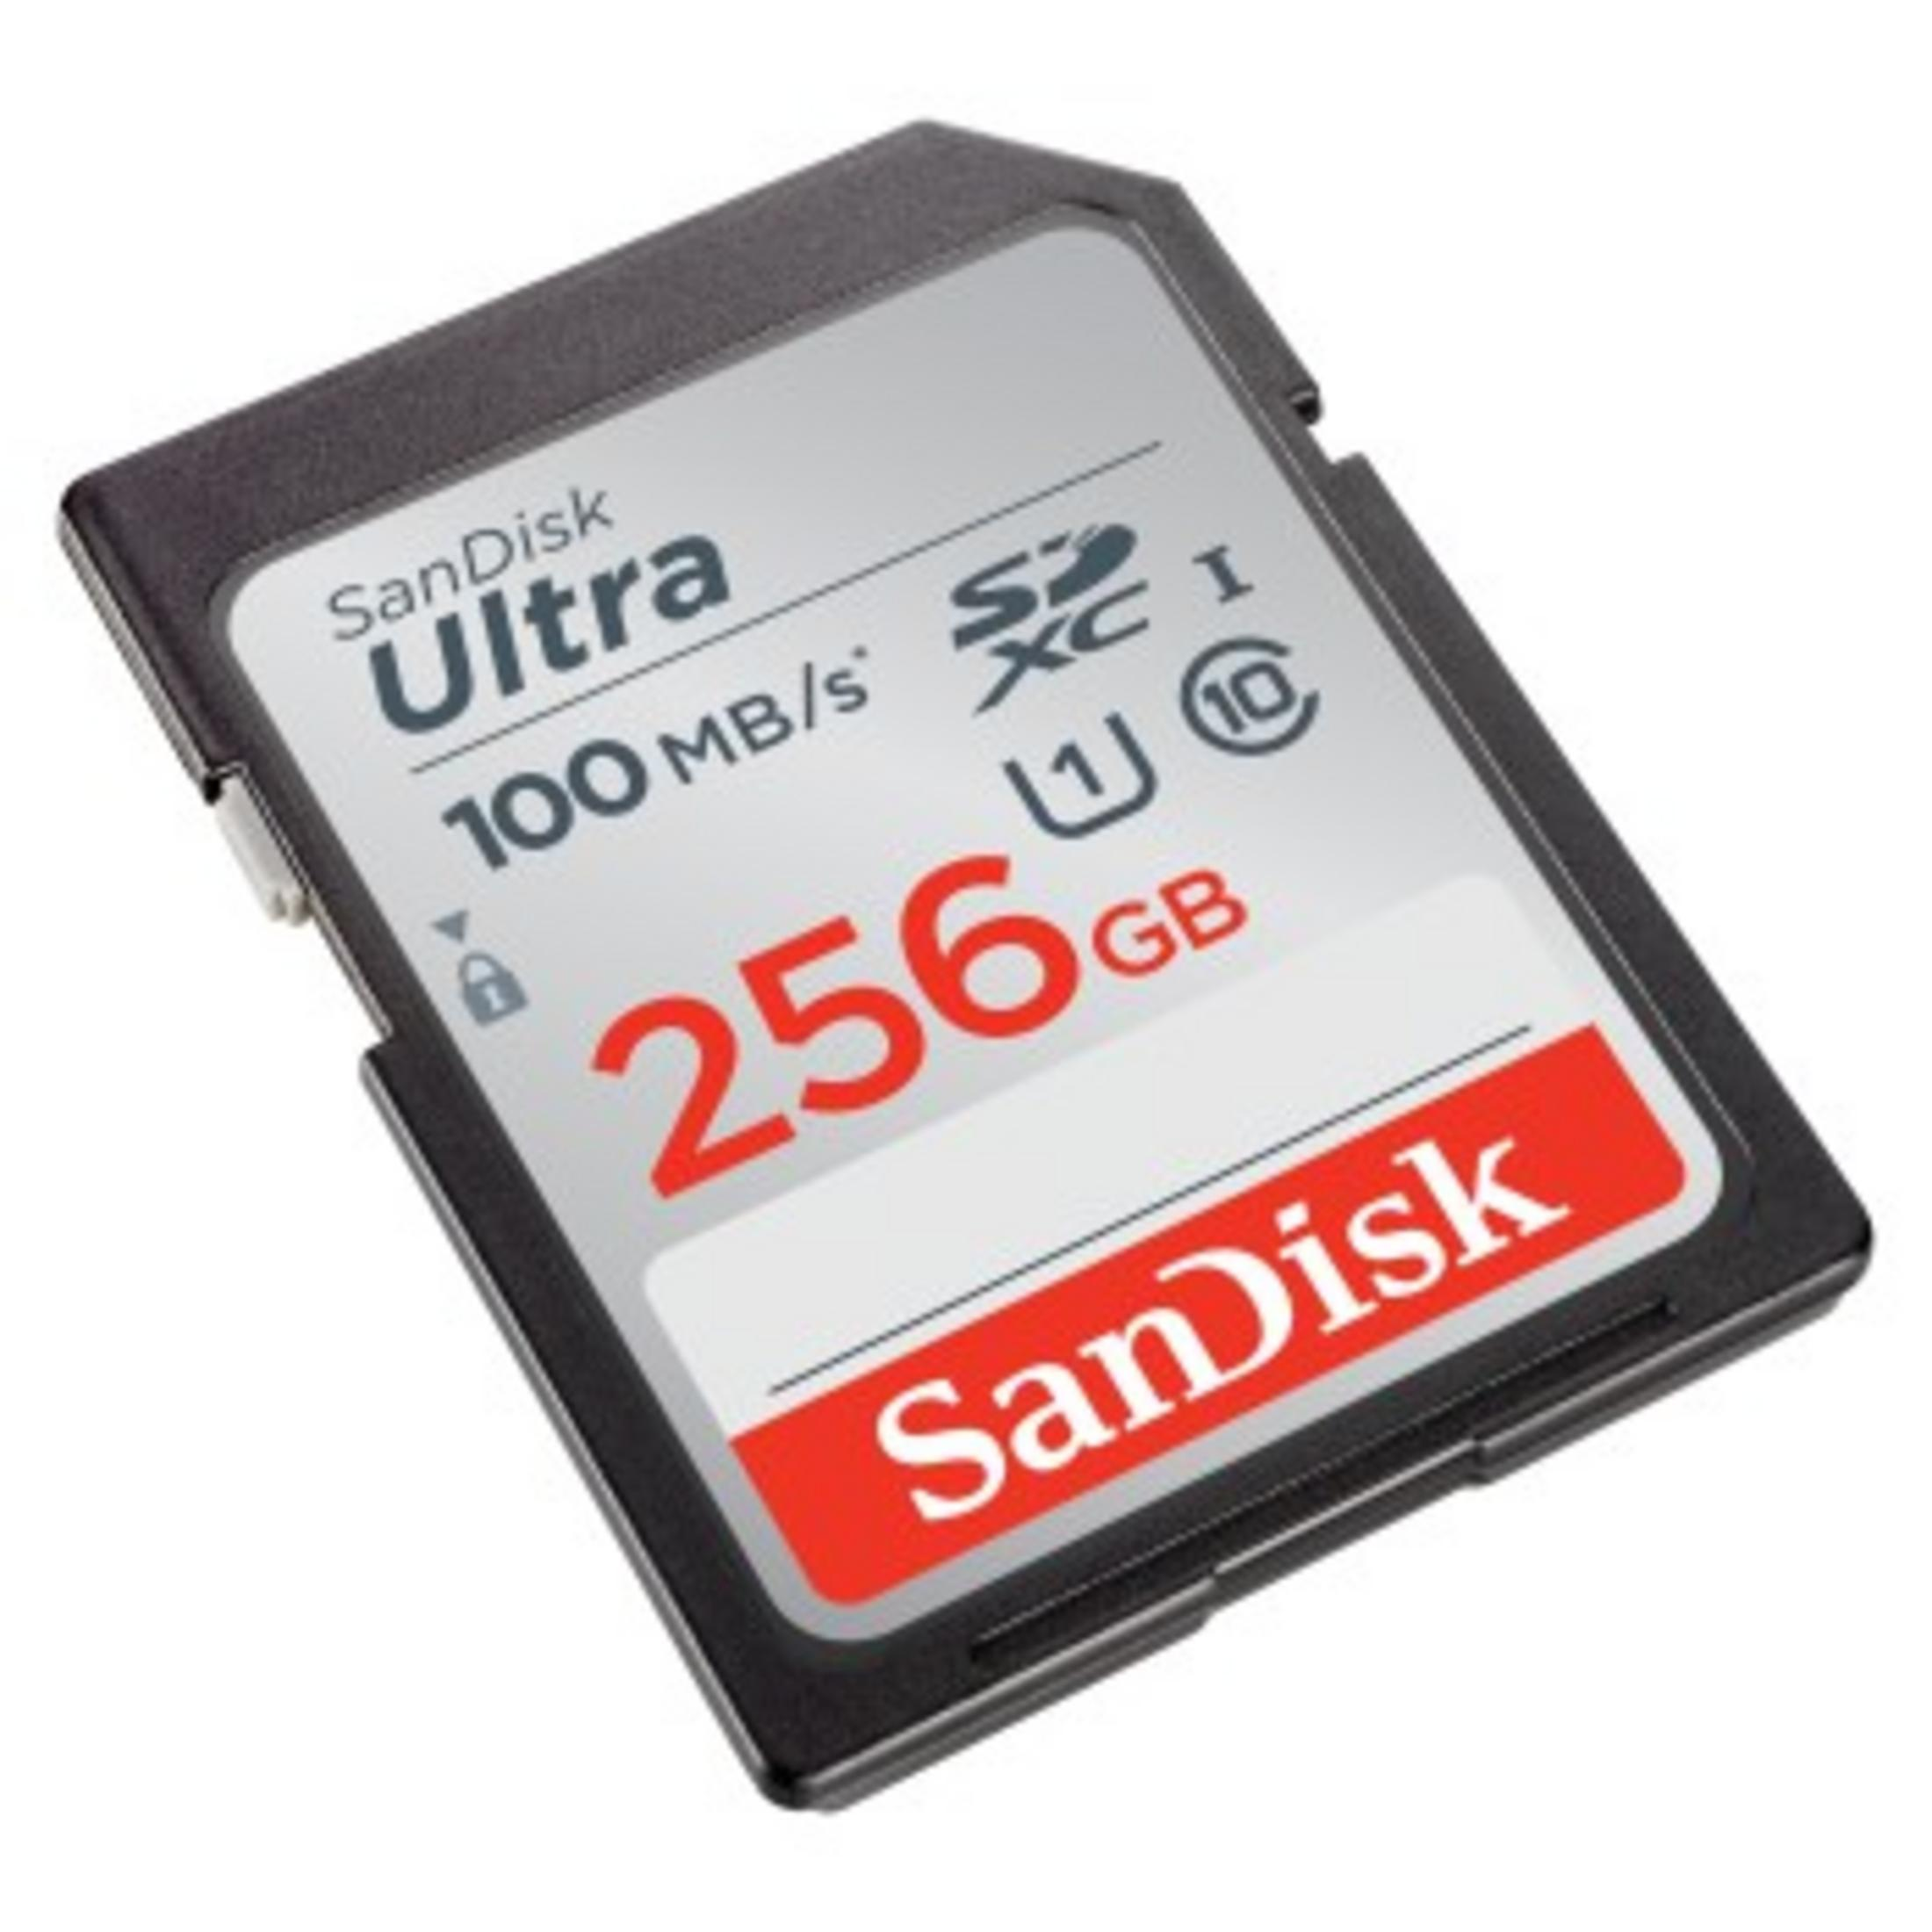 GB, MB/s SDXC 256 UL. Speicherkarte, SANDISK UHS-I, 100MB/S 256GB 100 SDXC SDSDUNR-256G-GN6IN